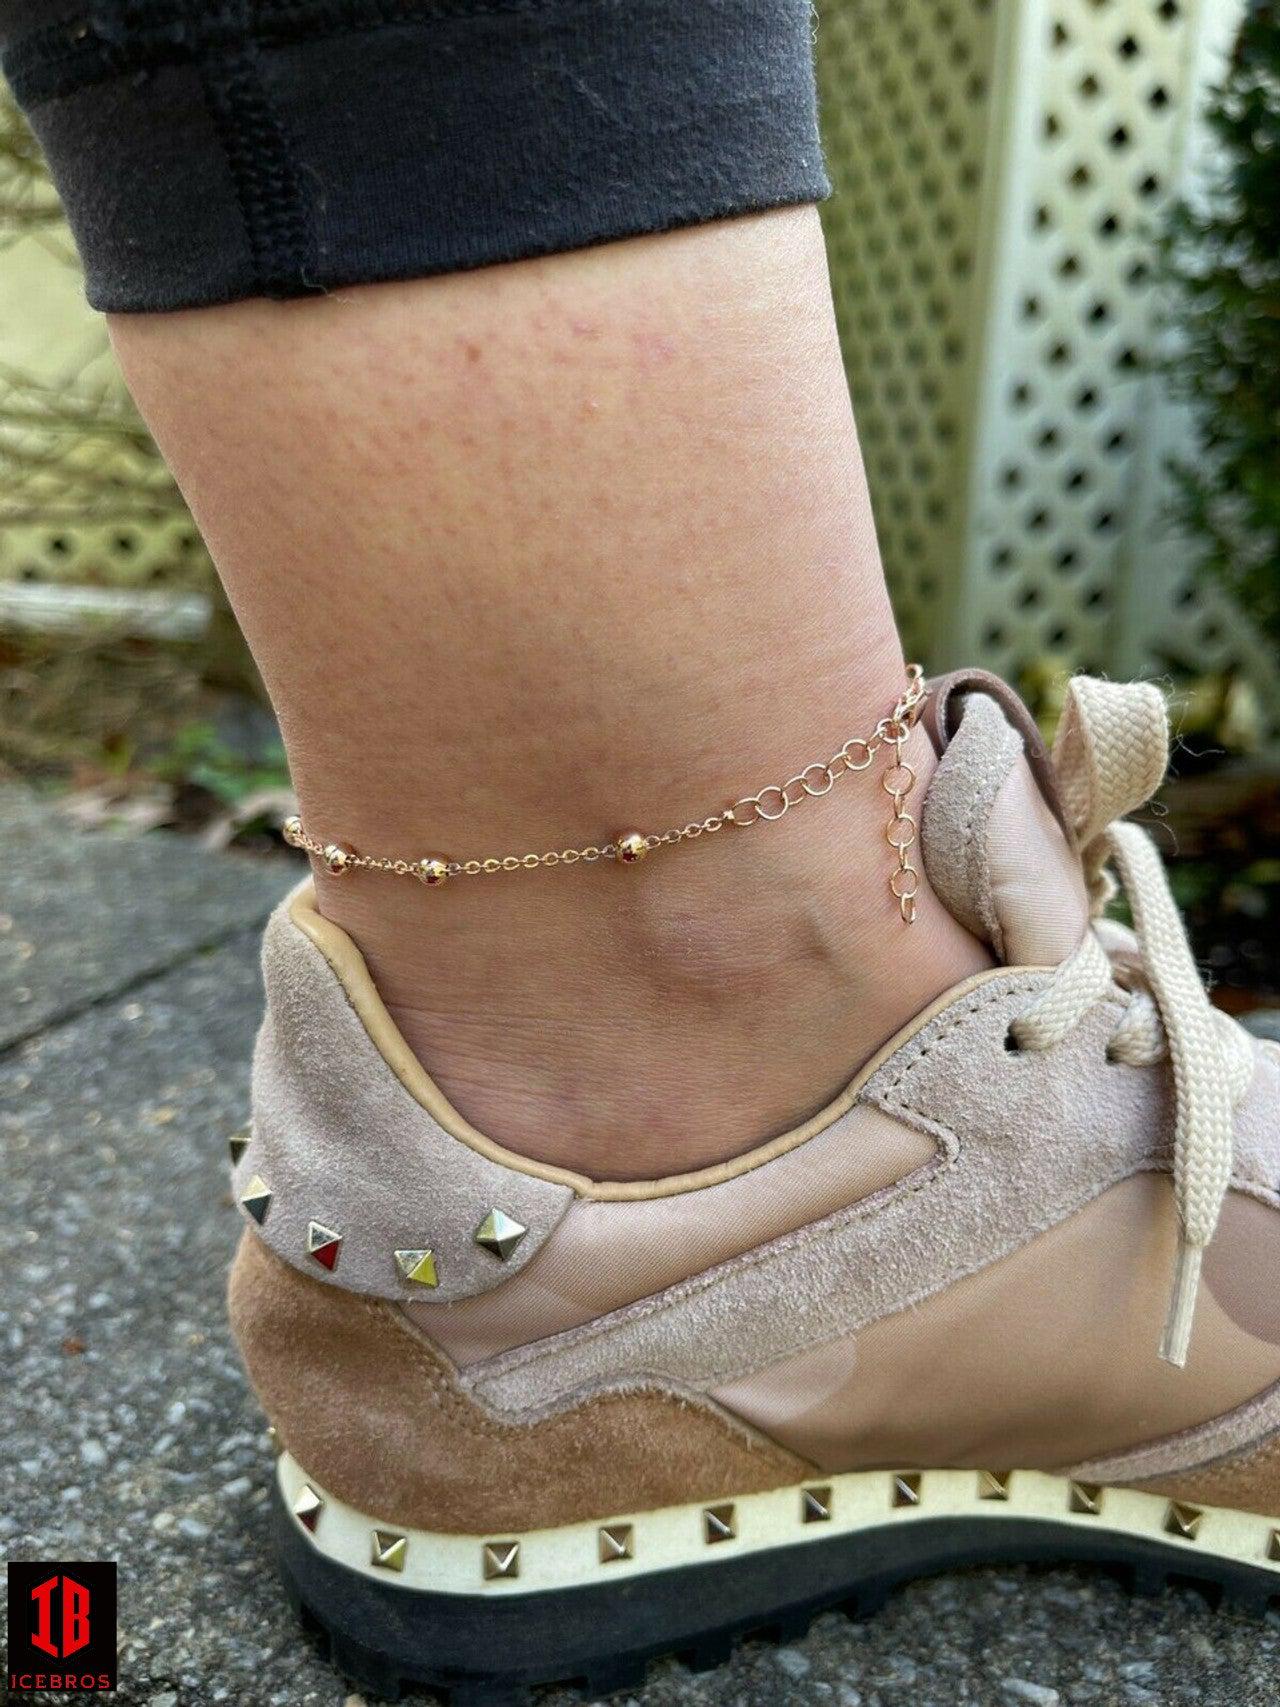 Beaded Ankle Bracelet Anklet White Gold Vermeil 925 Silver 8"-11.5" Girls Ladies